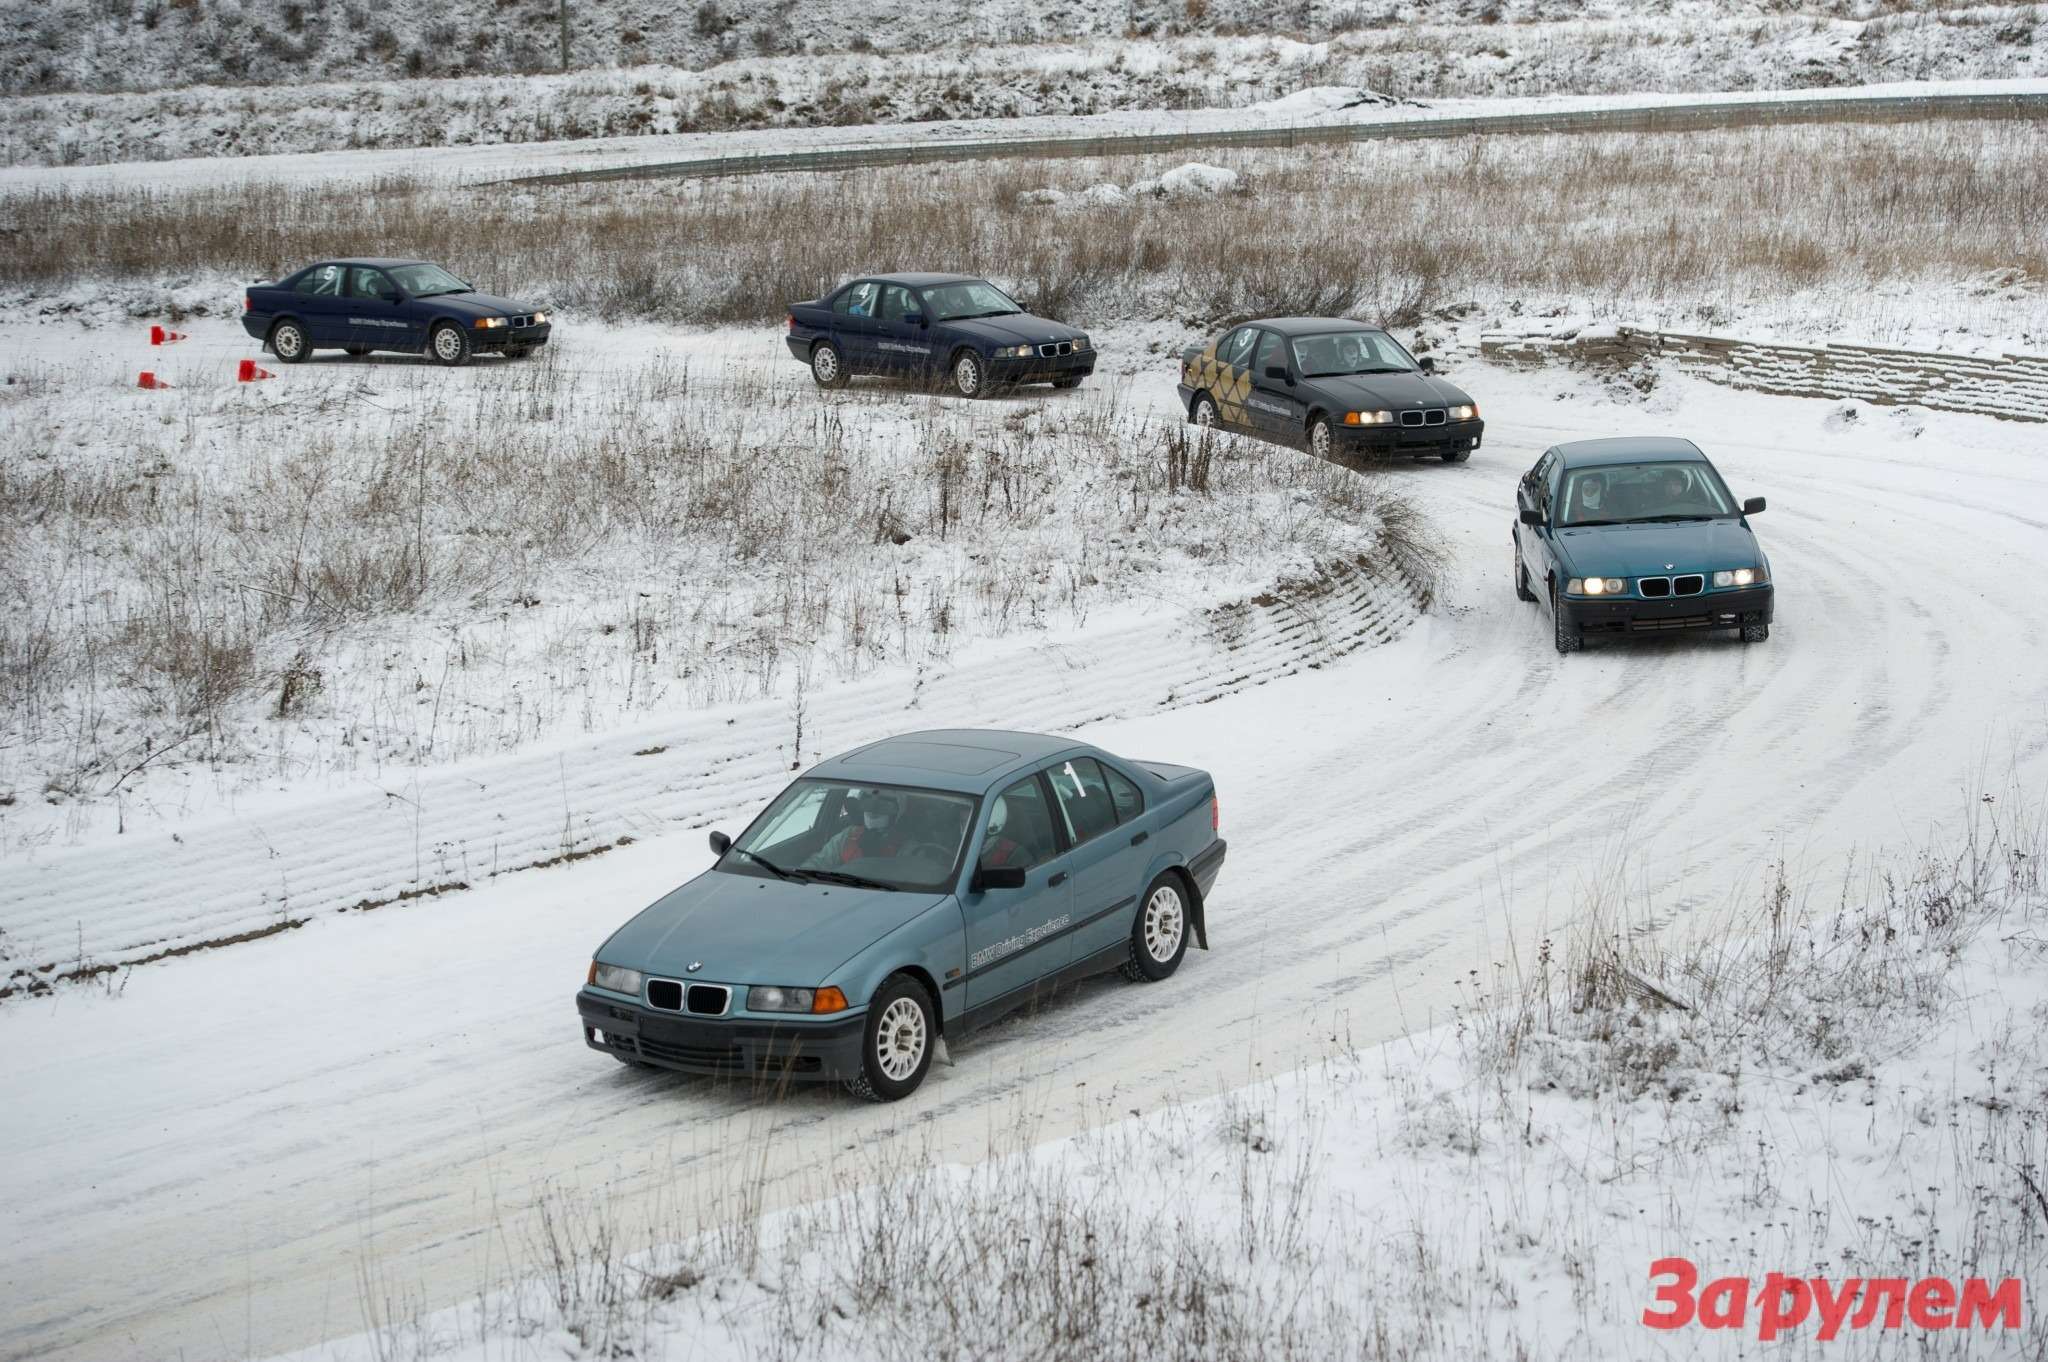 BMW xDrive to Rally (133)